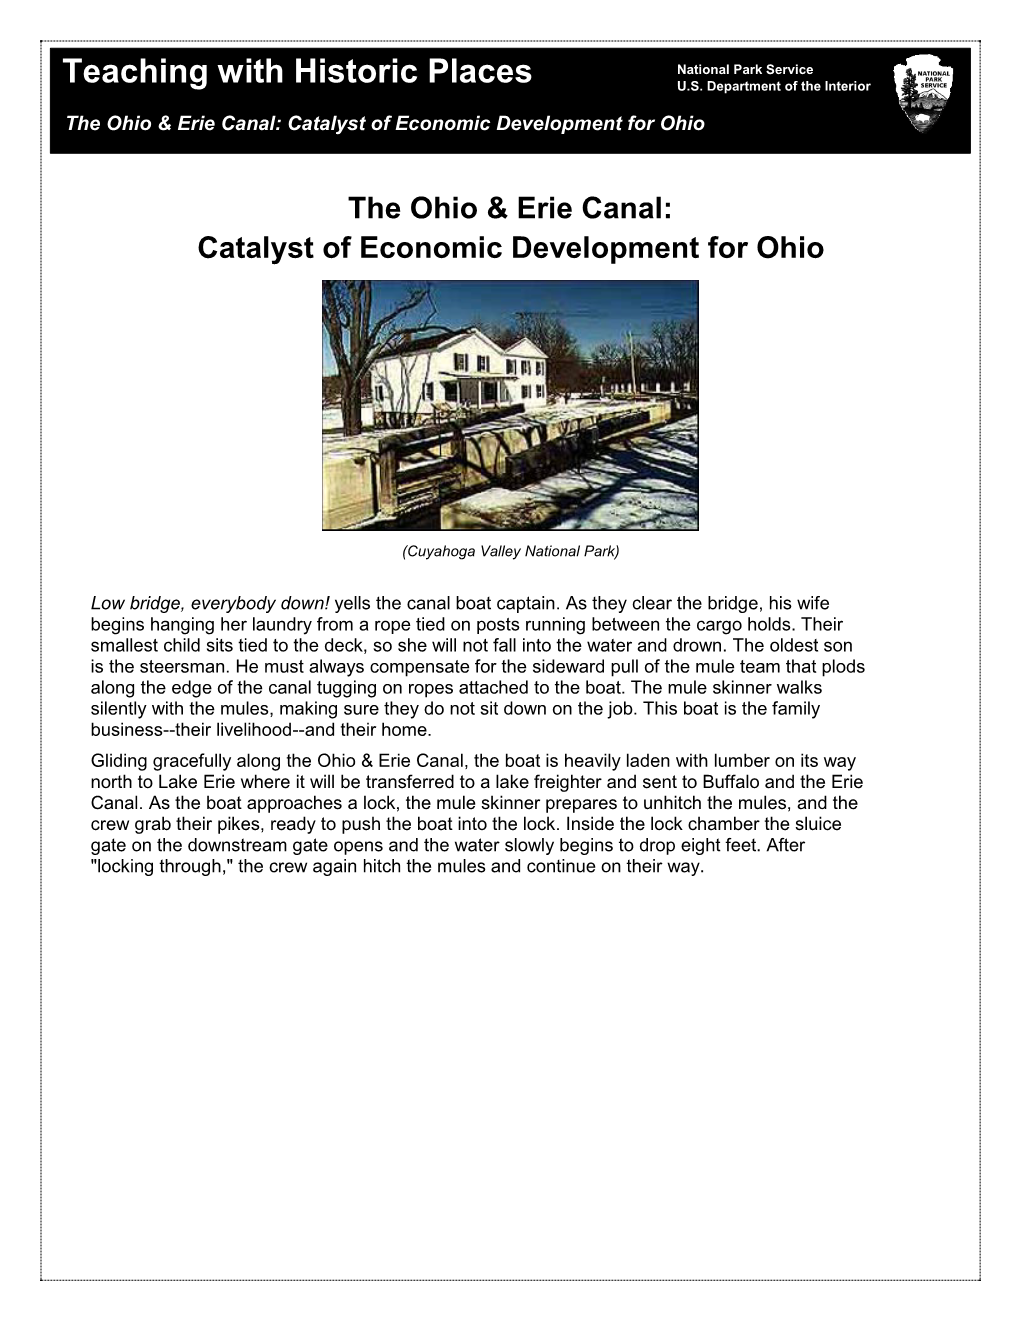 The Ohio & Erie Canal: Catalyst of Economic Development for Ohio